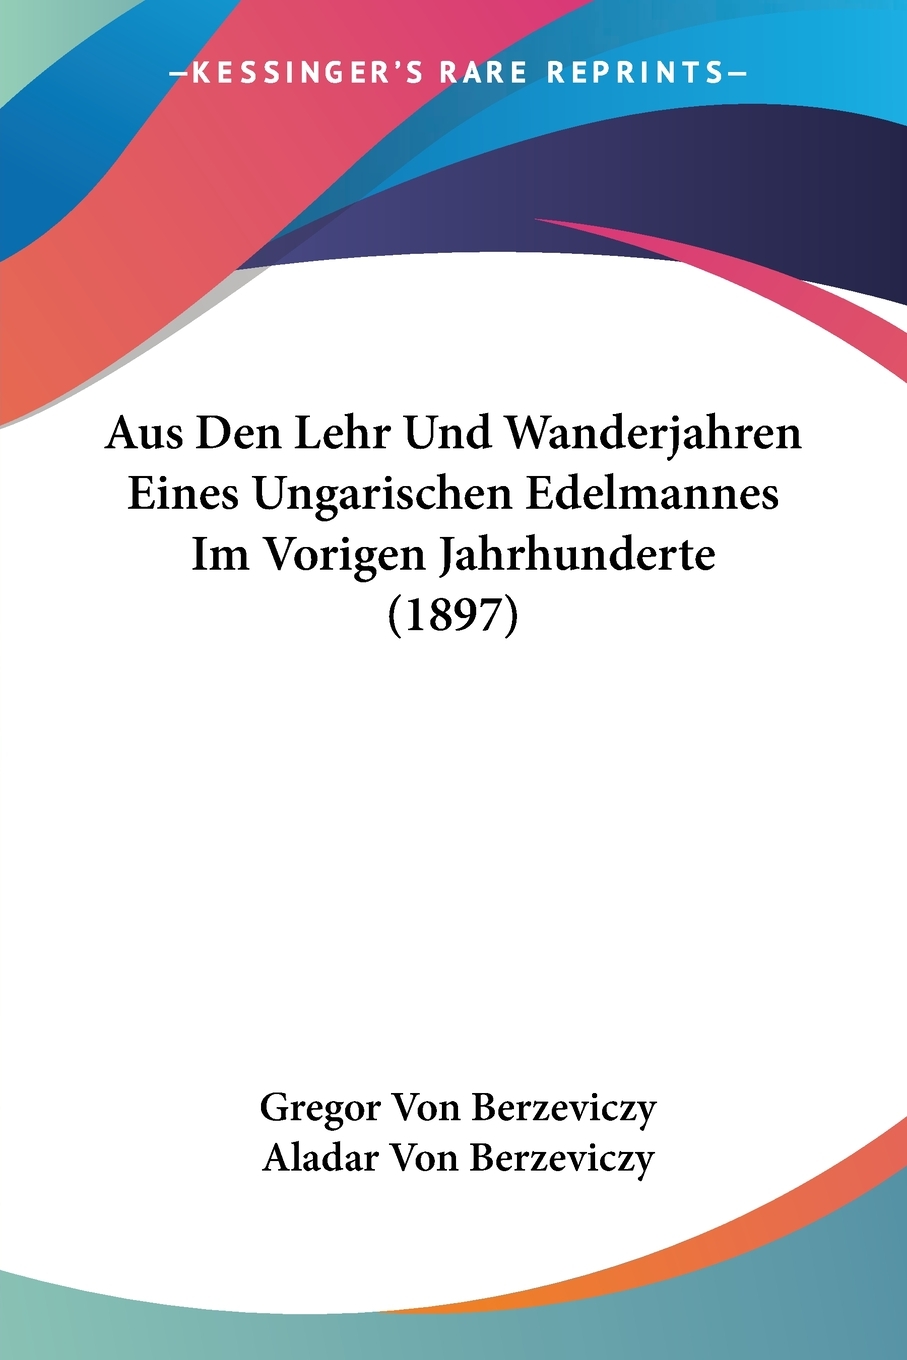 预售按需印刷 Aus Den Lehr Und Wanderjahren Eines Ungarischen Edelmannes Im Vorigen Jahrhunderte(1897)德语ger